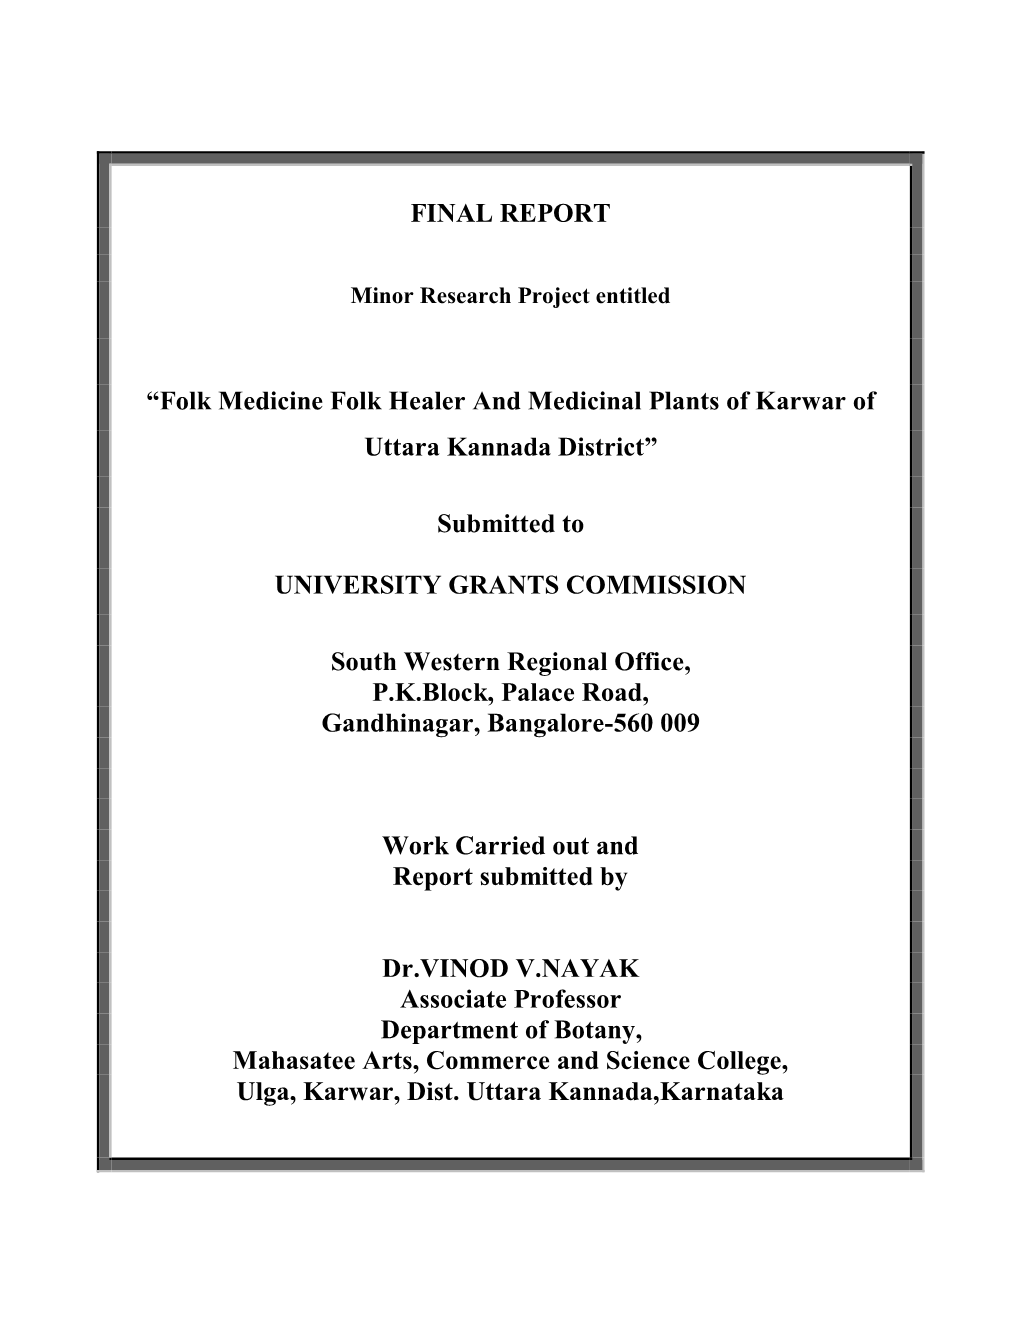 Folk Medicine Folk Healer and Medicinal Plants of Karwar of Uttara Kannada District”